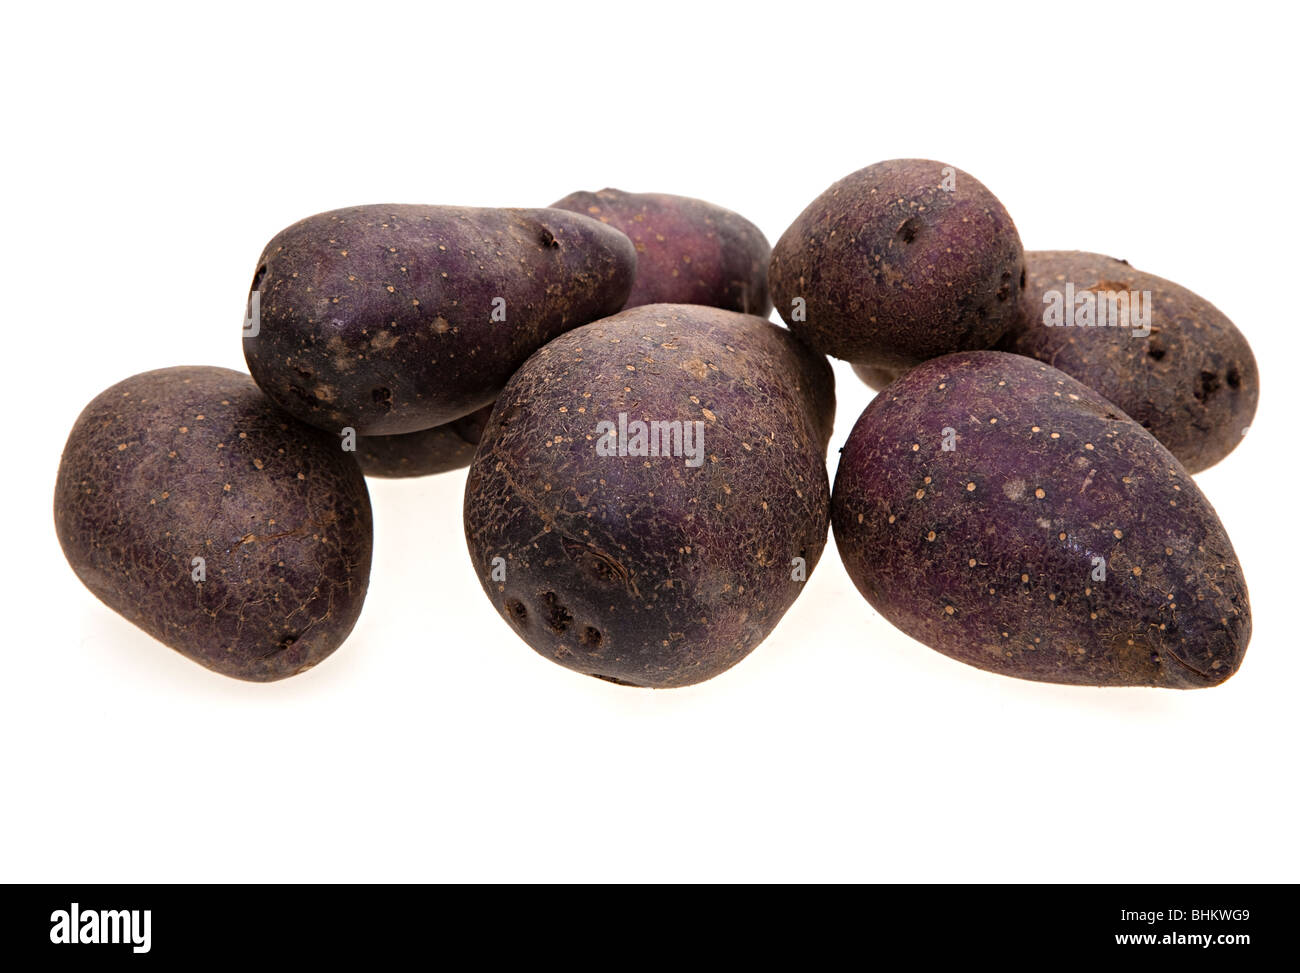 Shetland Black variety of potato UK Stock Photo